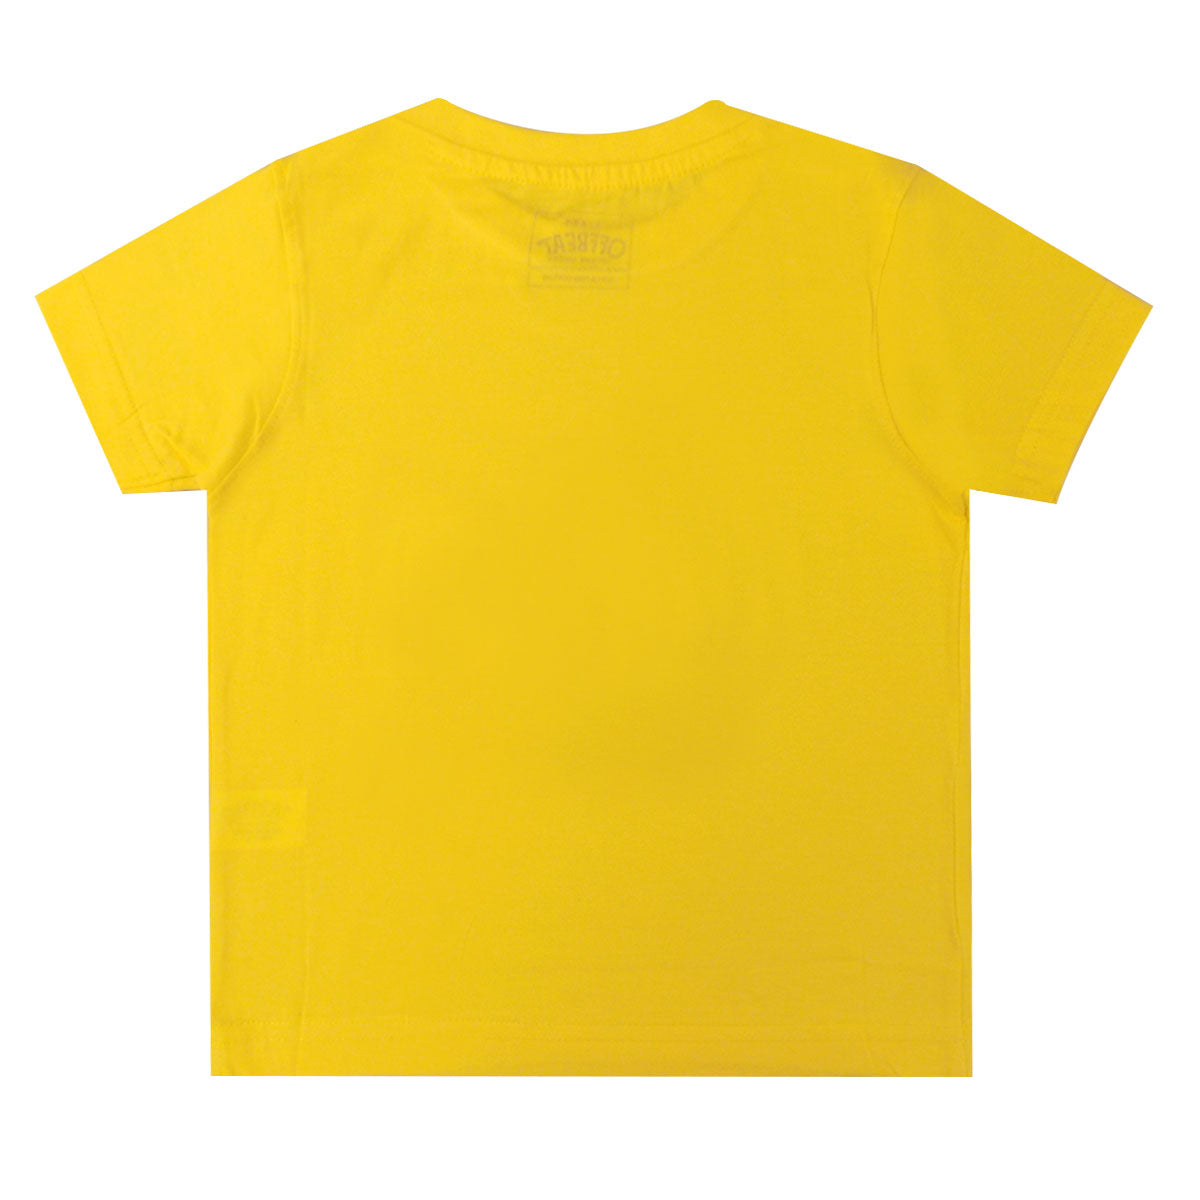 Give me a Hug - Premium Round Neck Cotton Tees for Kids - Lemon Yellow